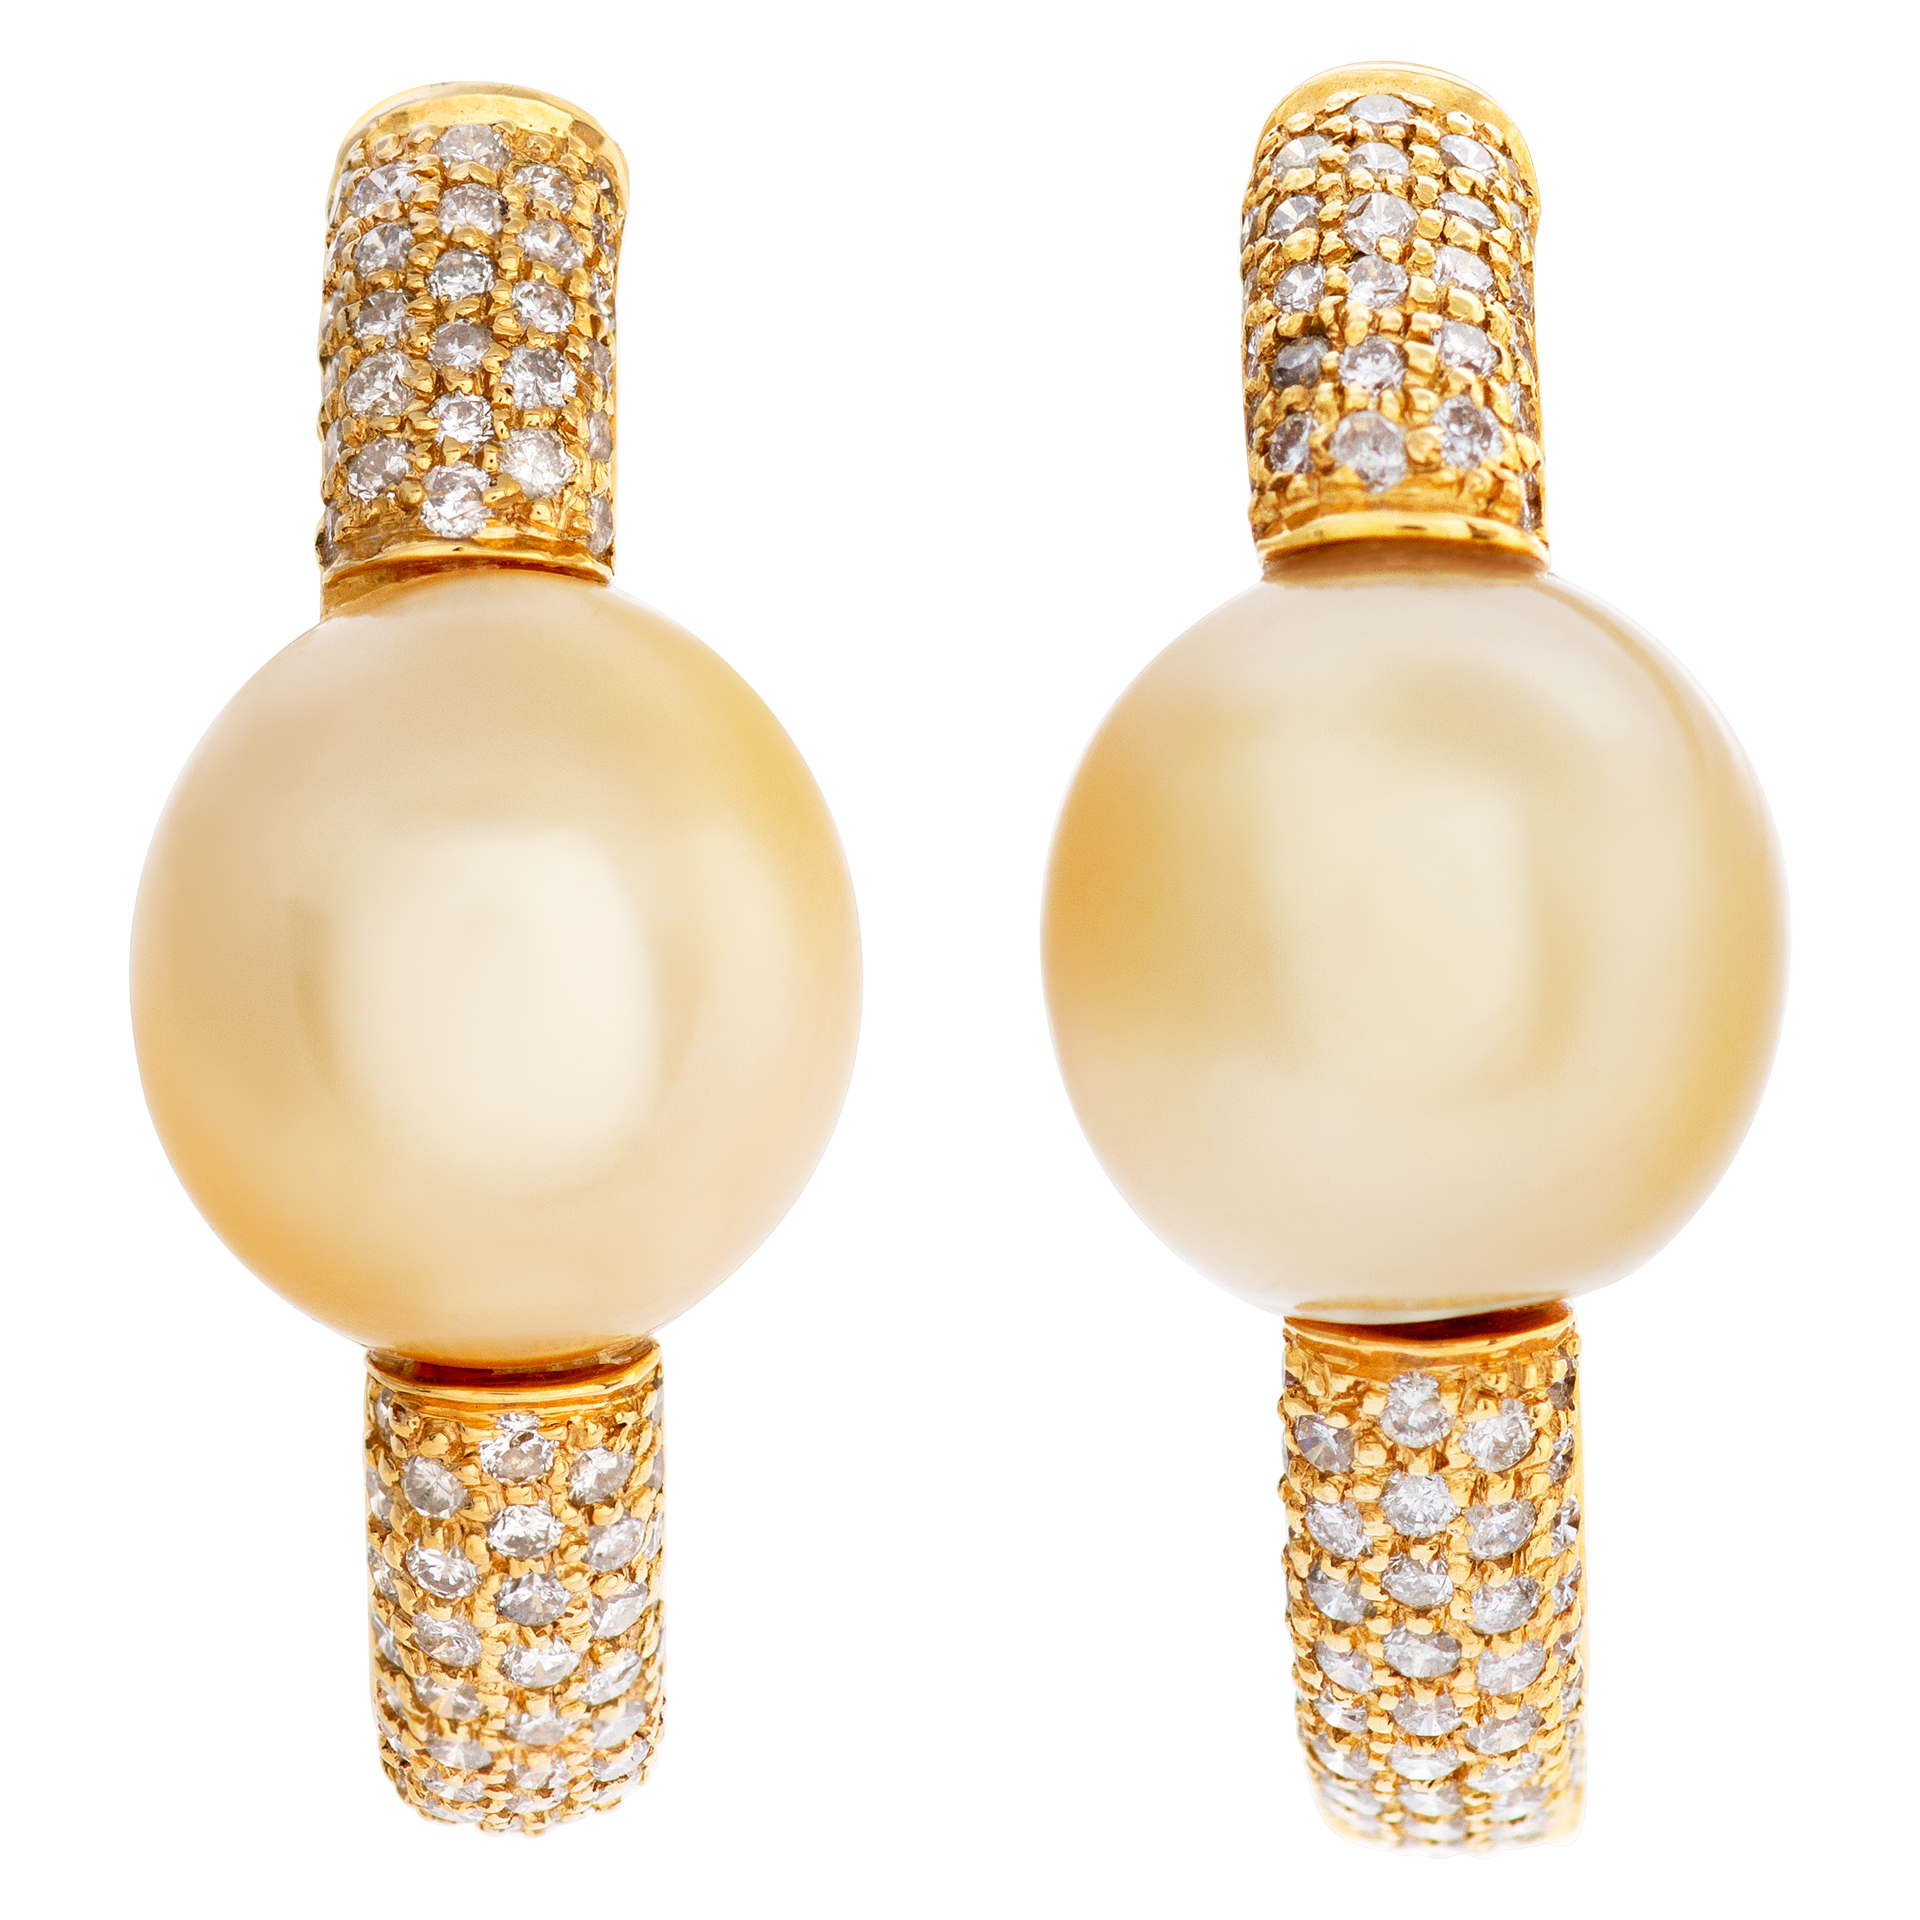 GOlden South Sea parls (11.5 x12mm) & diamonds hoops earrings set in 18K yellow gold. image 1